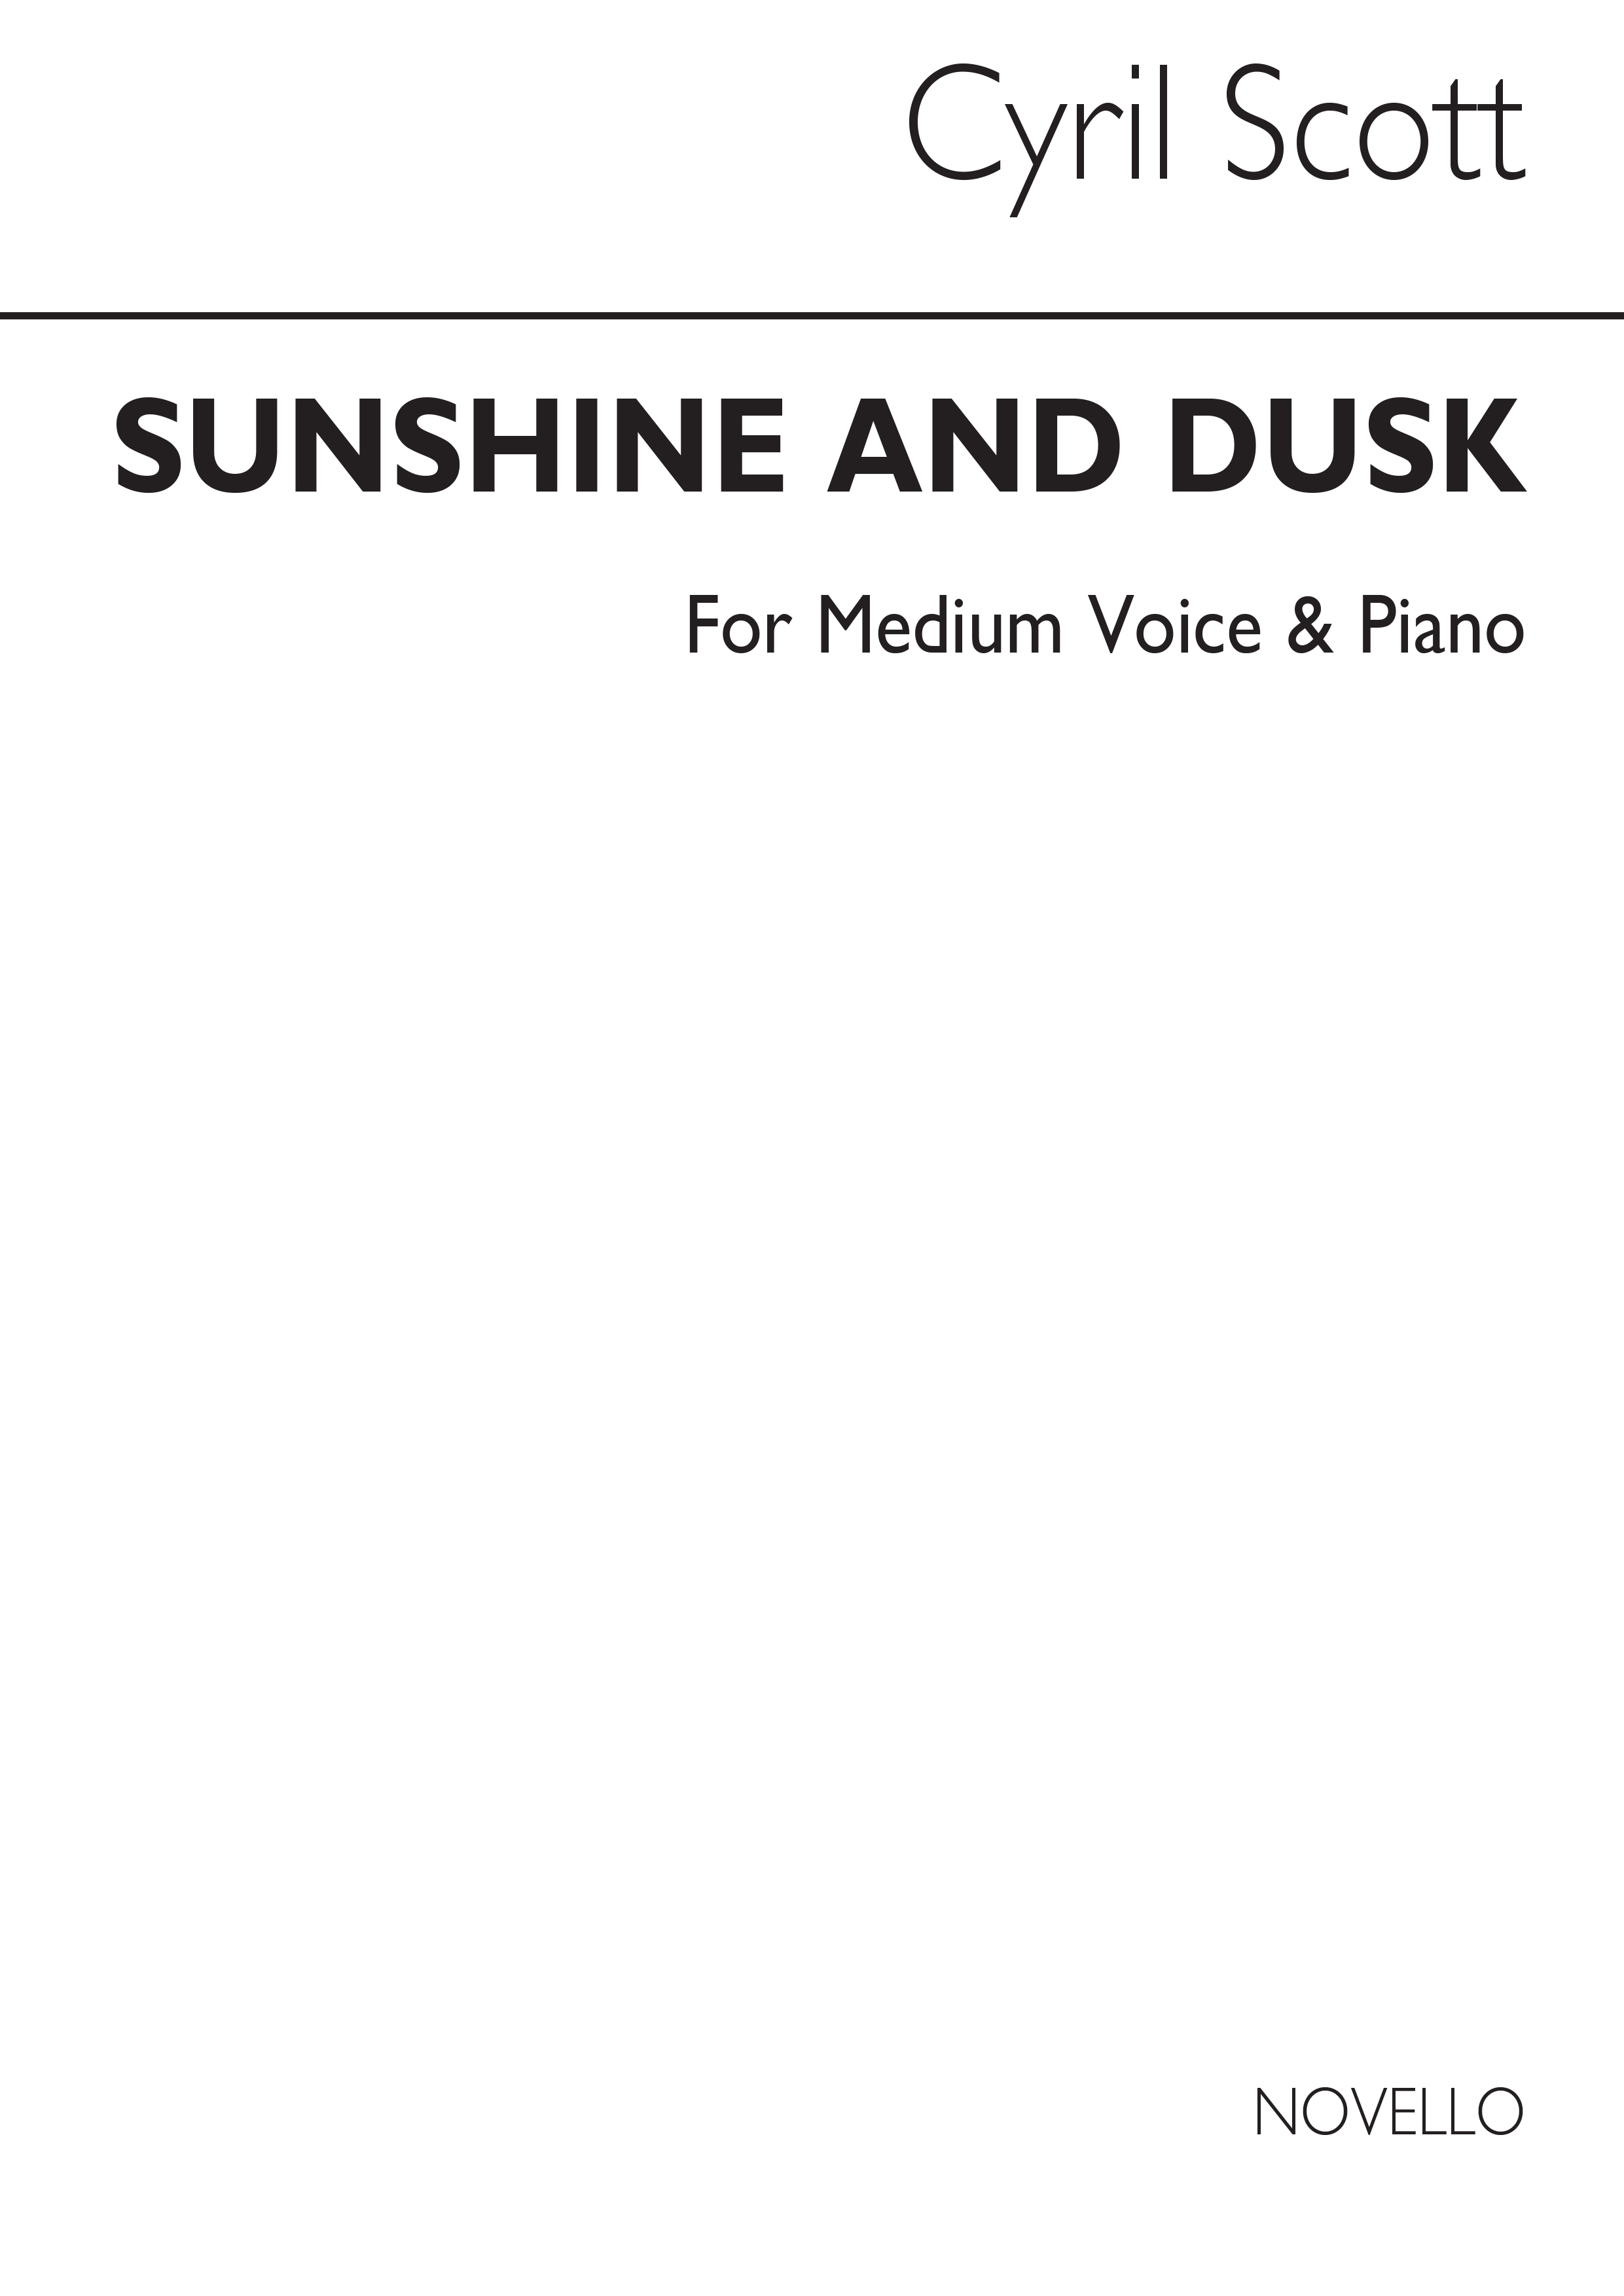 Cyril Scott: Sunshine And Dusk-medium Voice/Piano: Medium Voice: Vocal Work